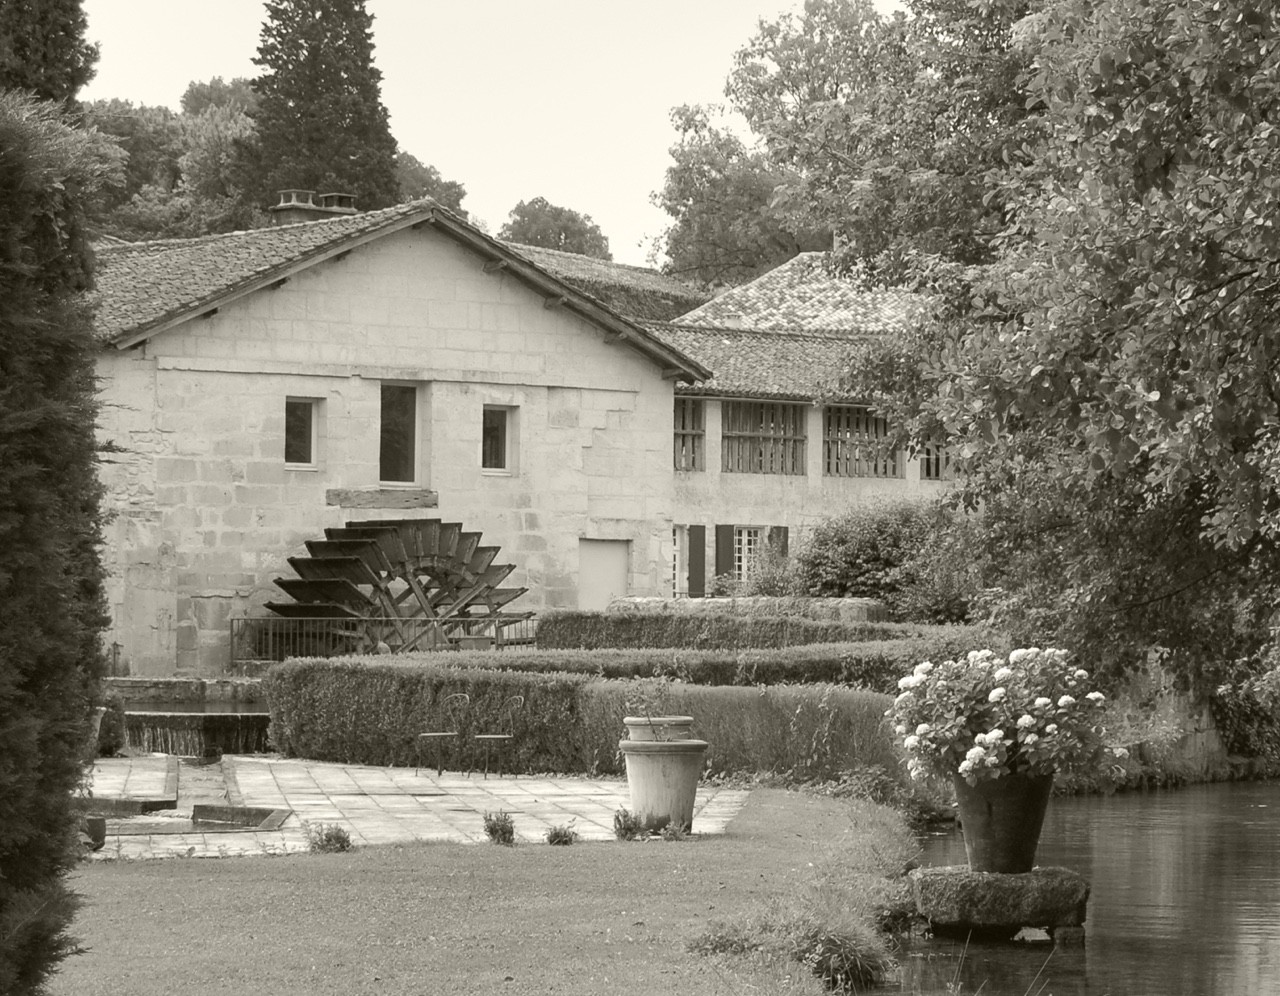 Black and white image of Sazerac de Forge mill house